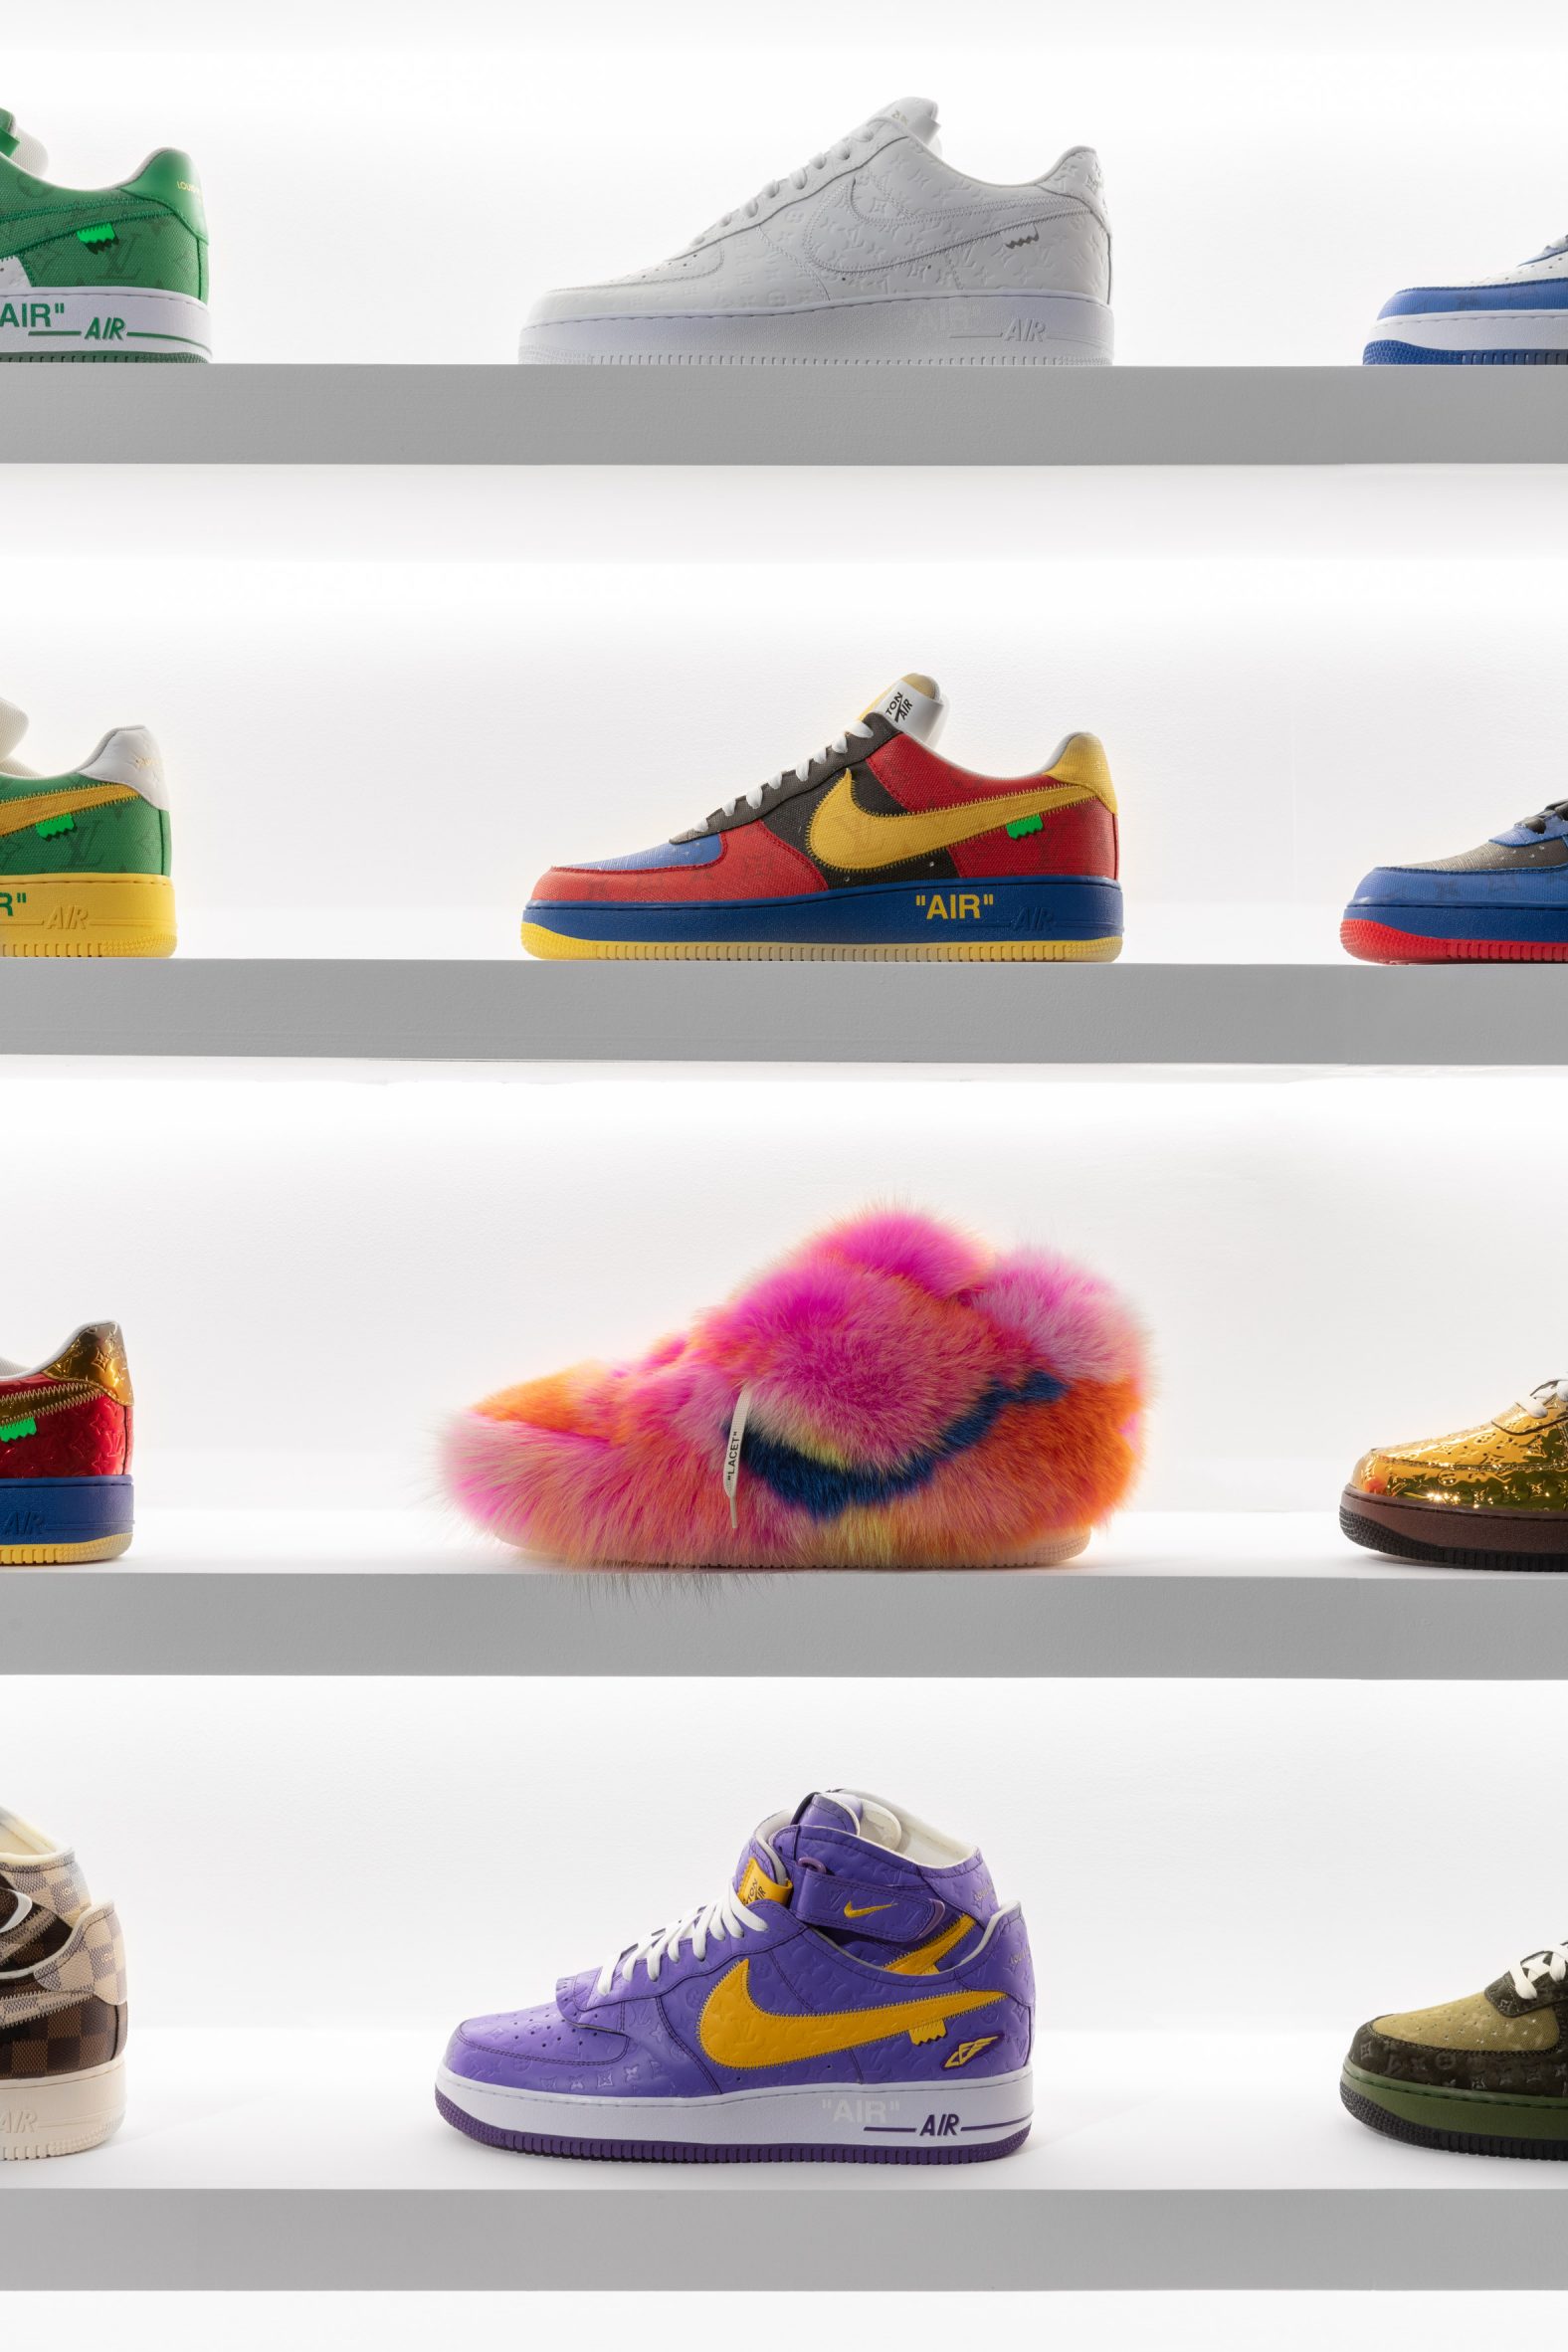 Complex Sneakers on X: .@virgilabloh strolling Paris in MoMA x